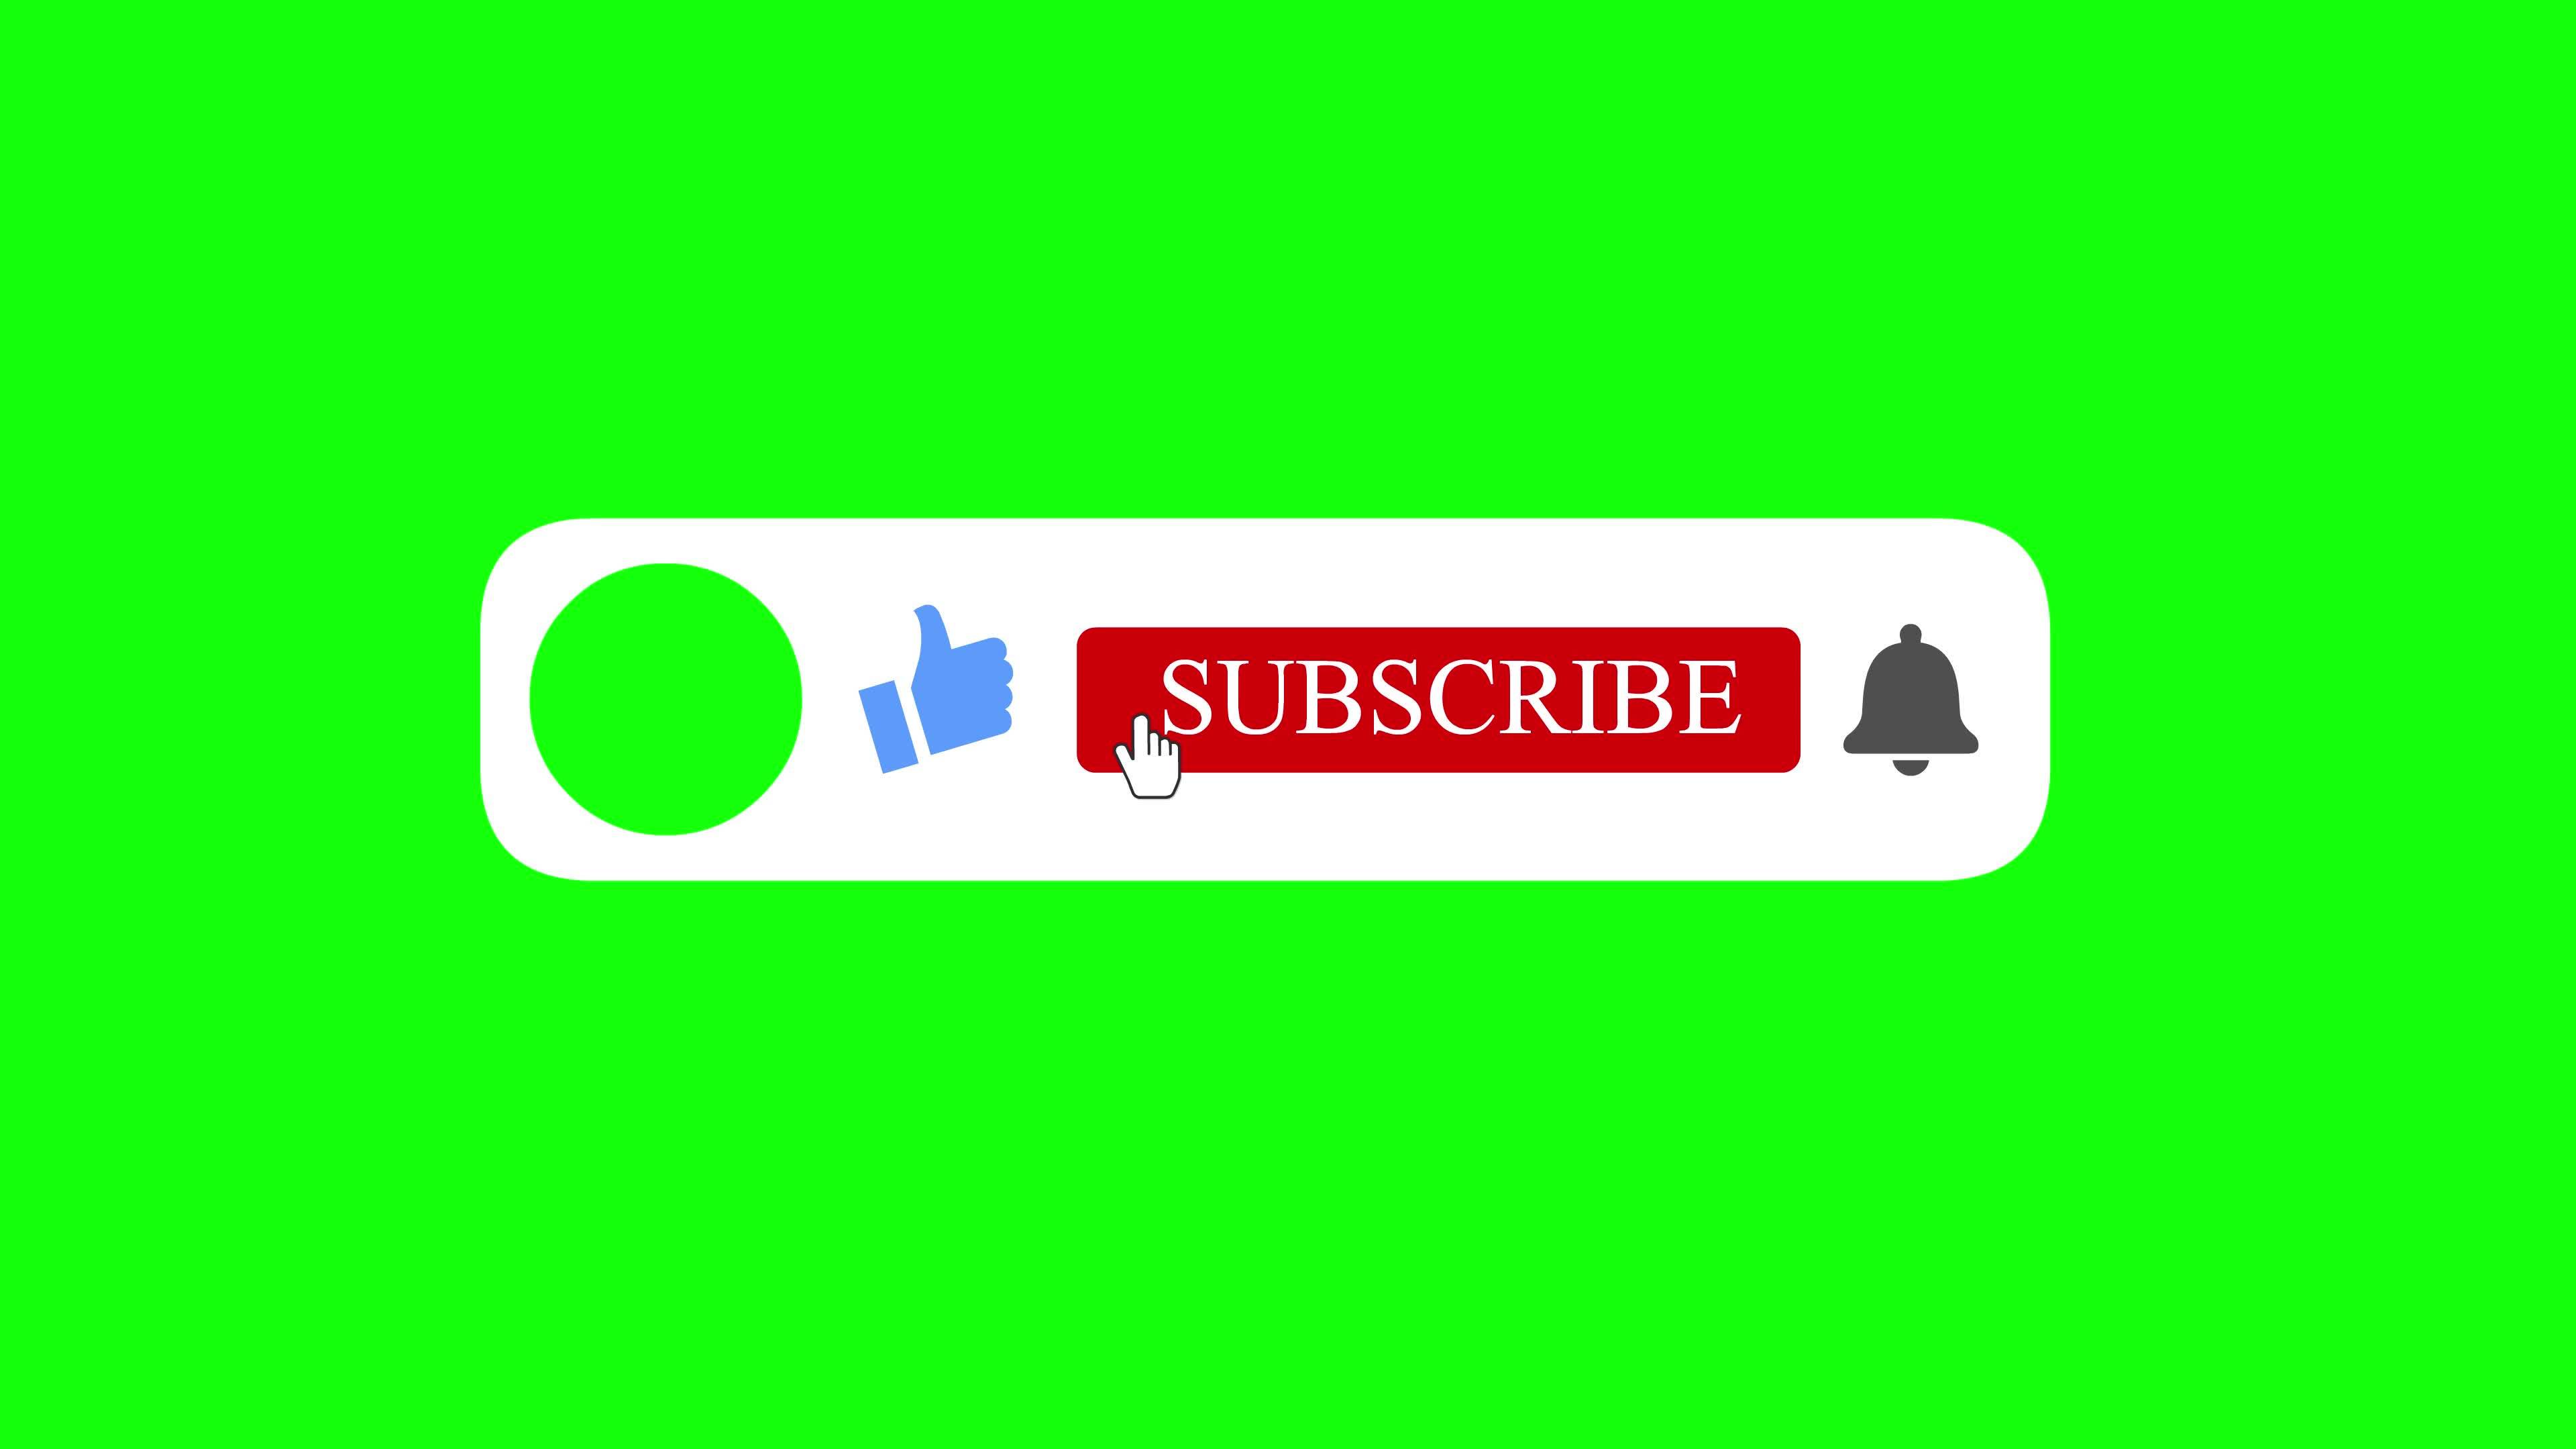 green-screen-subscribe-button-bell-animation-green-screen-animation-encouraging-stock-video